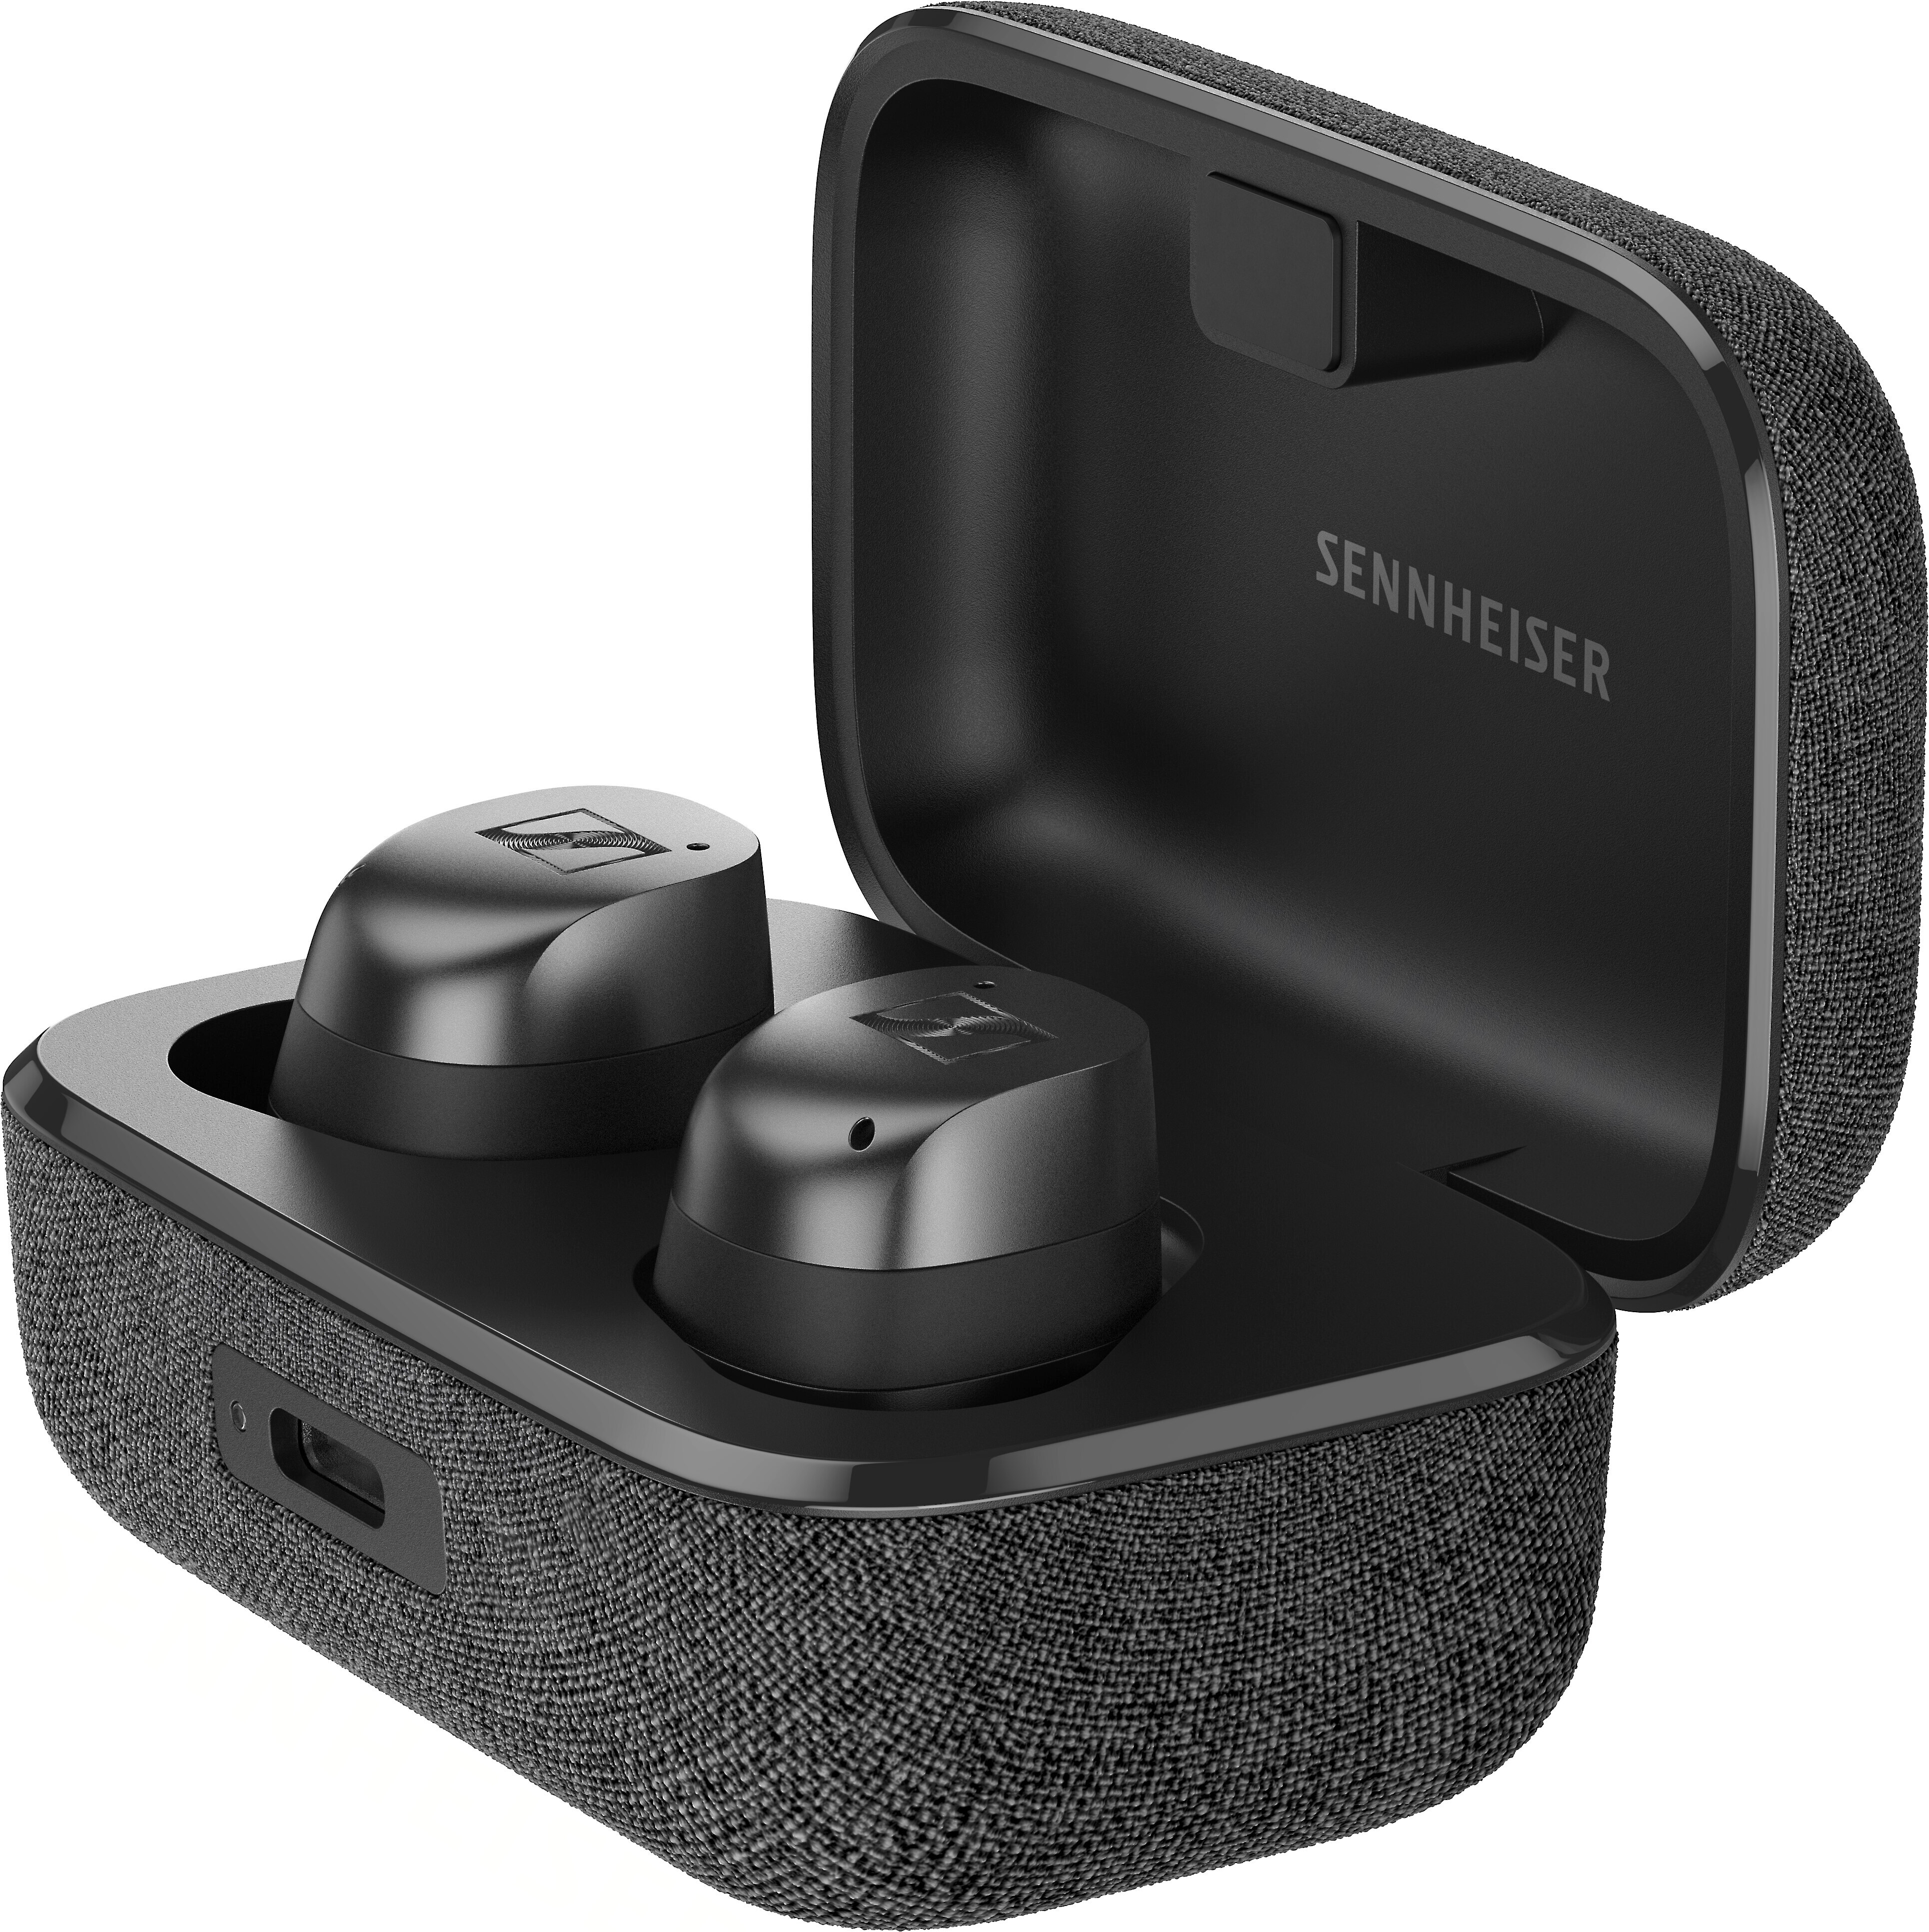 Sennheiser Momentum True Wireless 3 review: Fantastic earbuds that cost a  lot